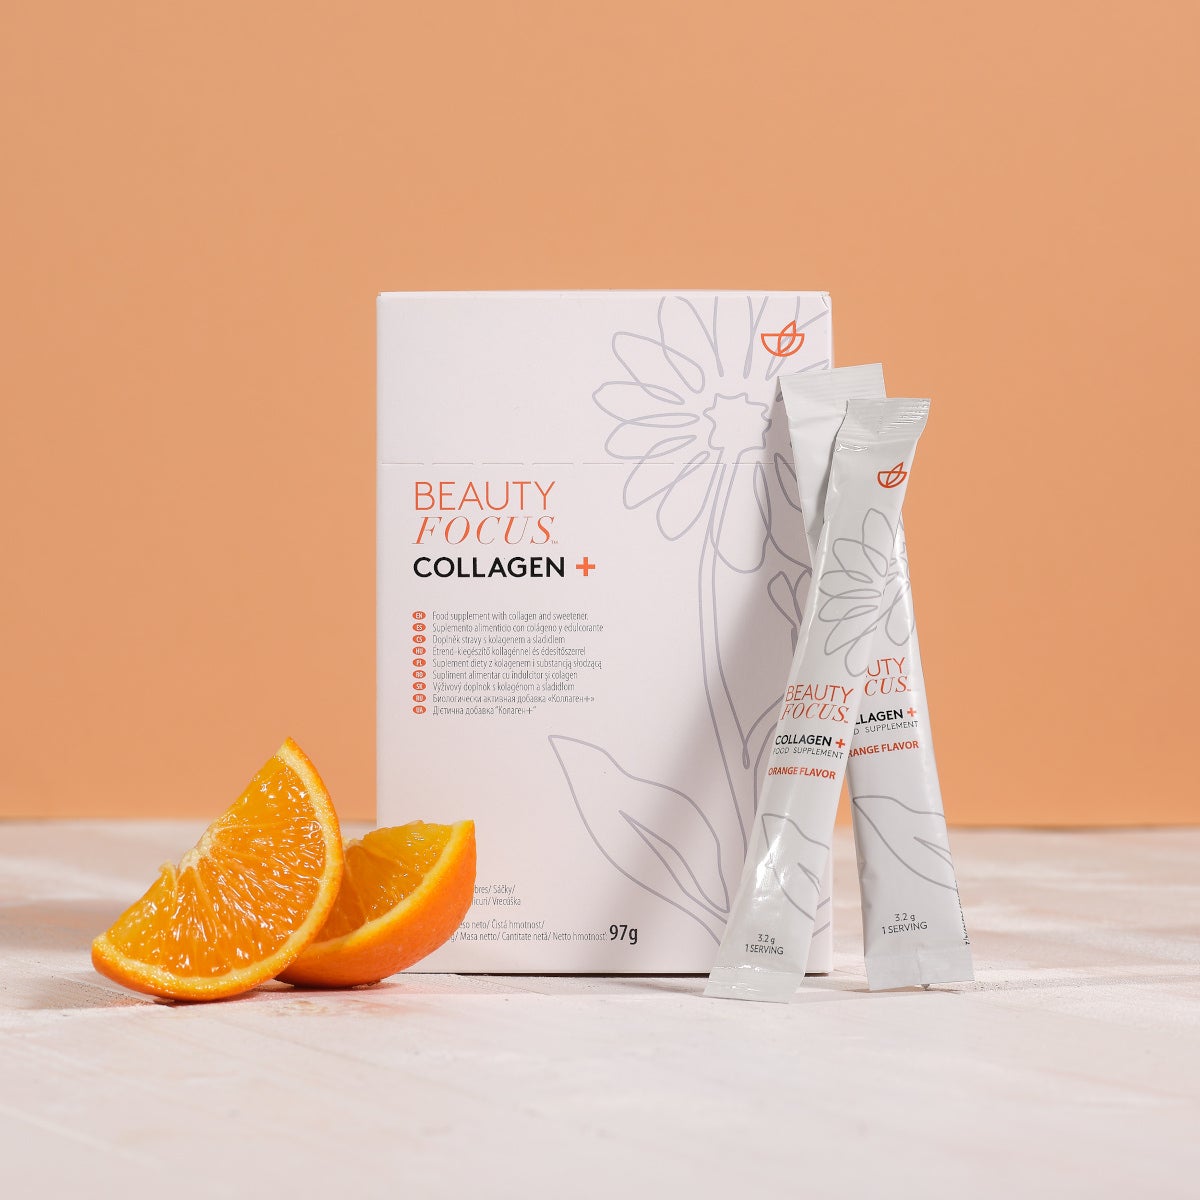 beauty-focus-collagen-plus-stickpack-orange-flavor